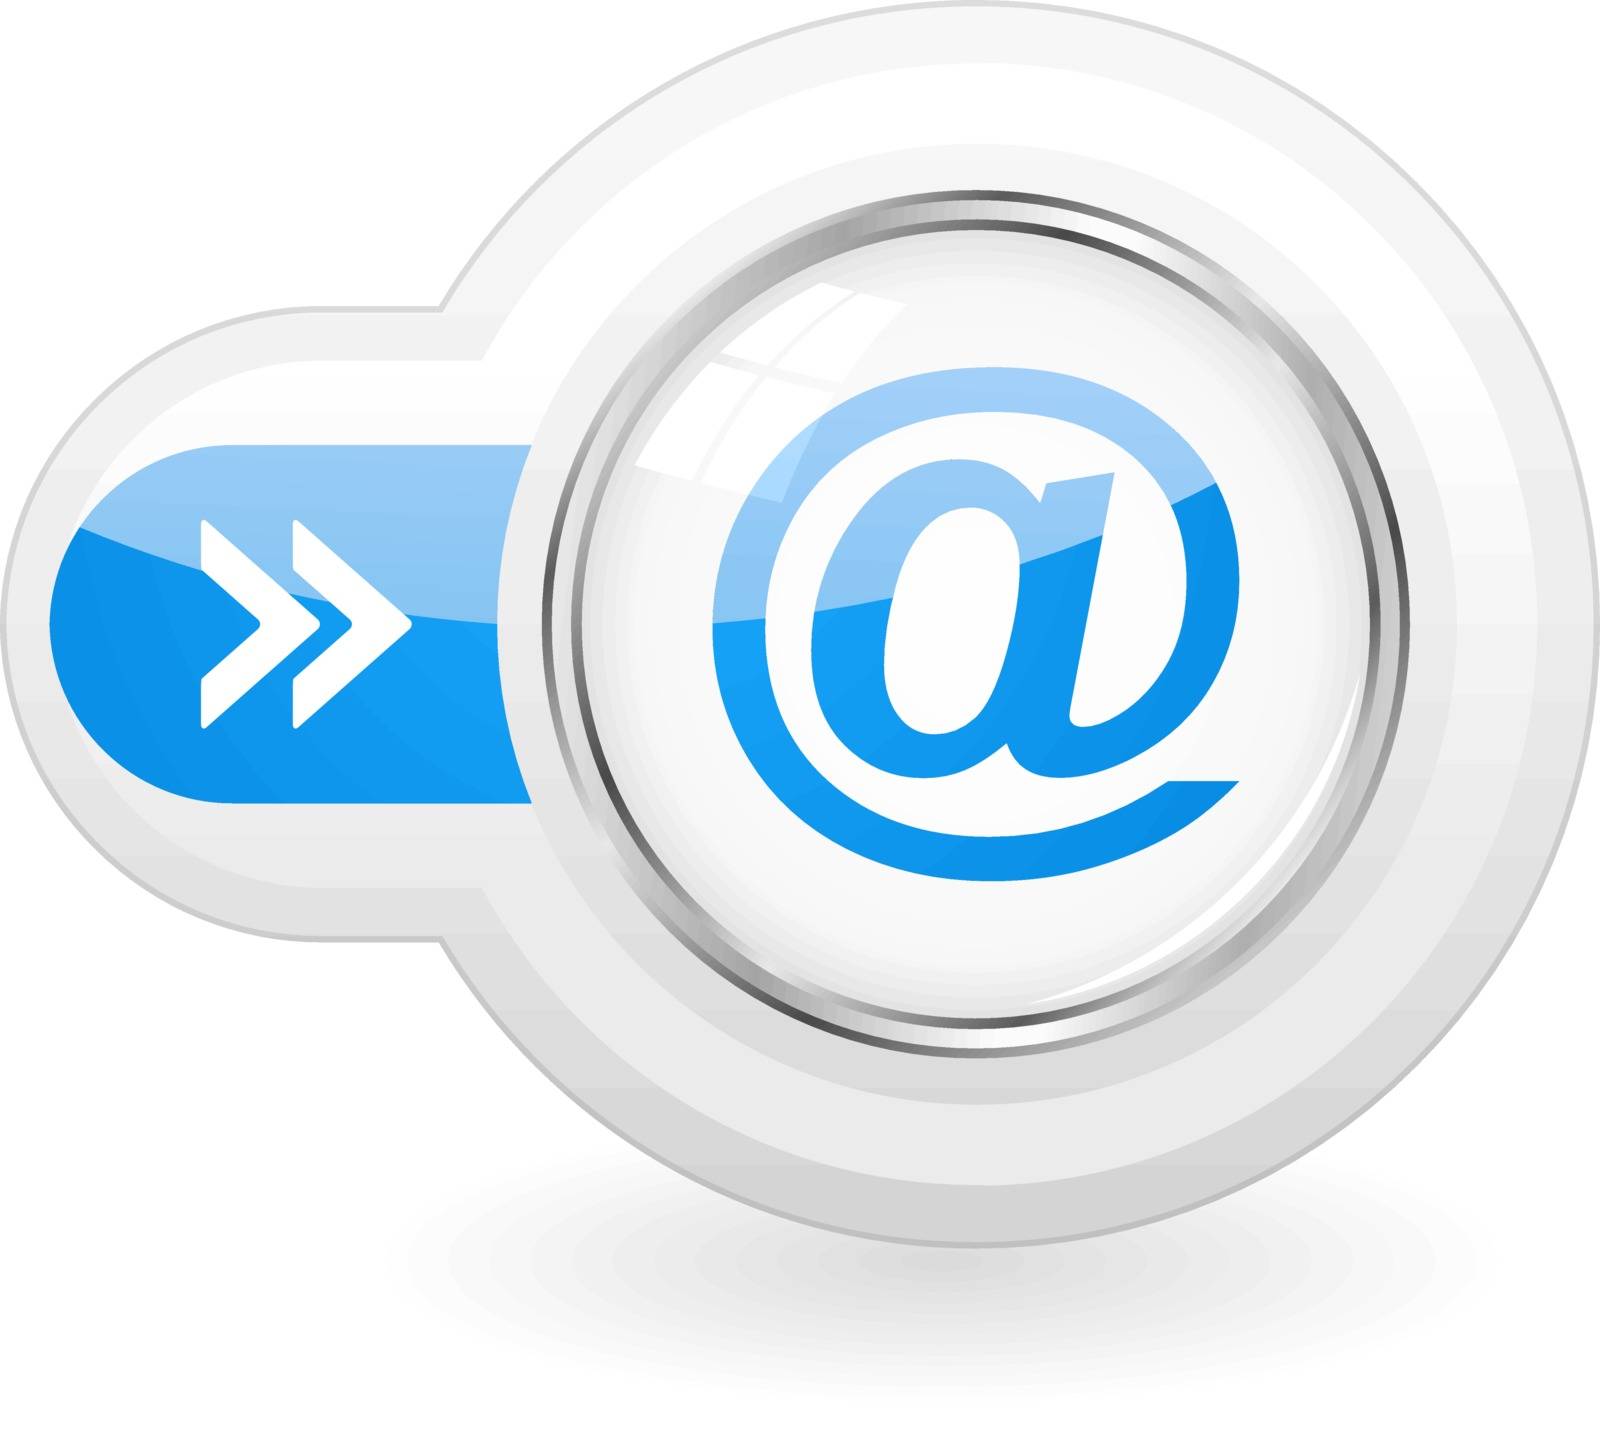 E-MAIL icon. Usable for web design.